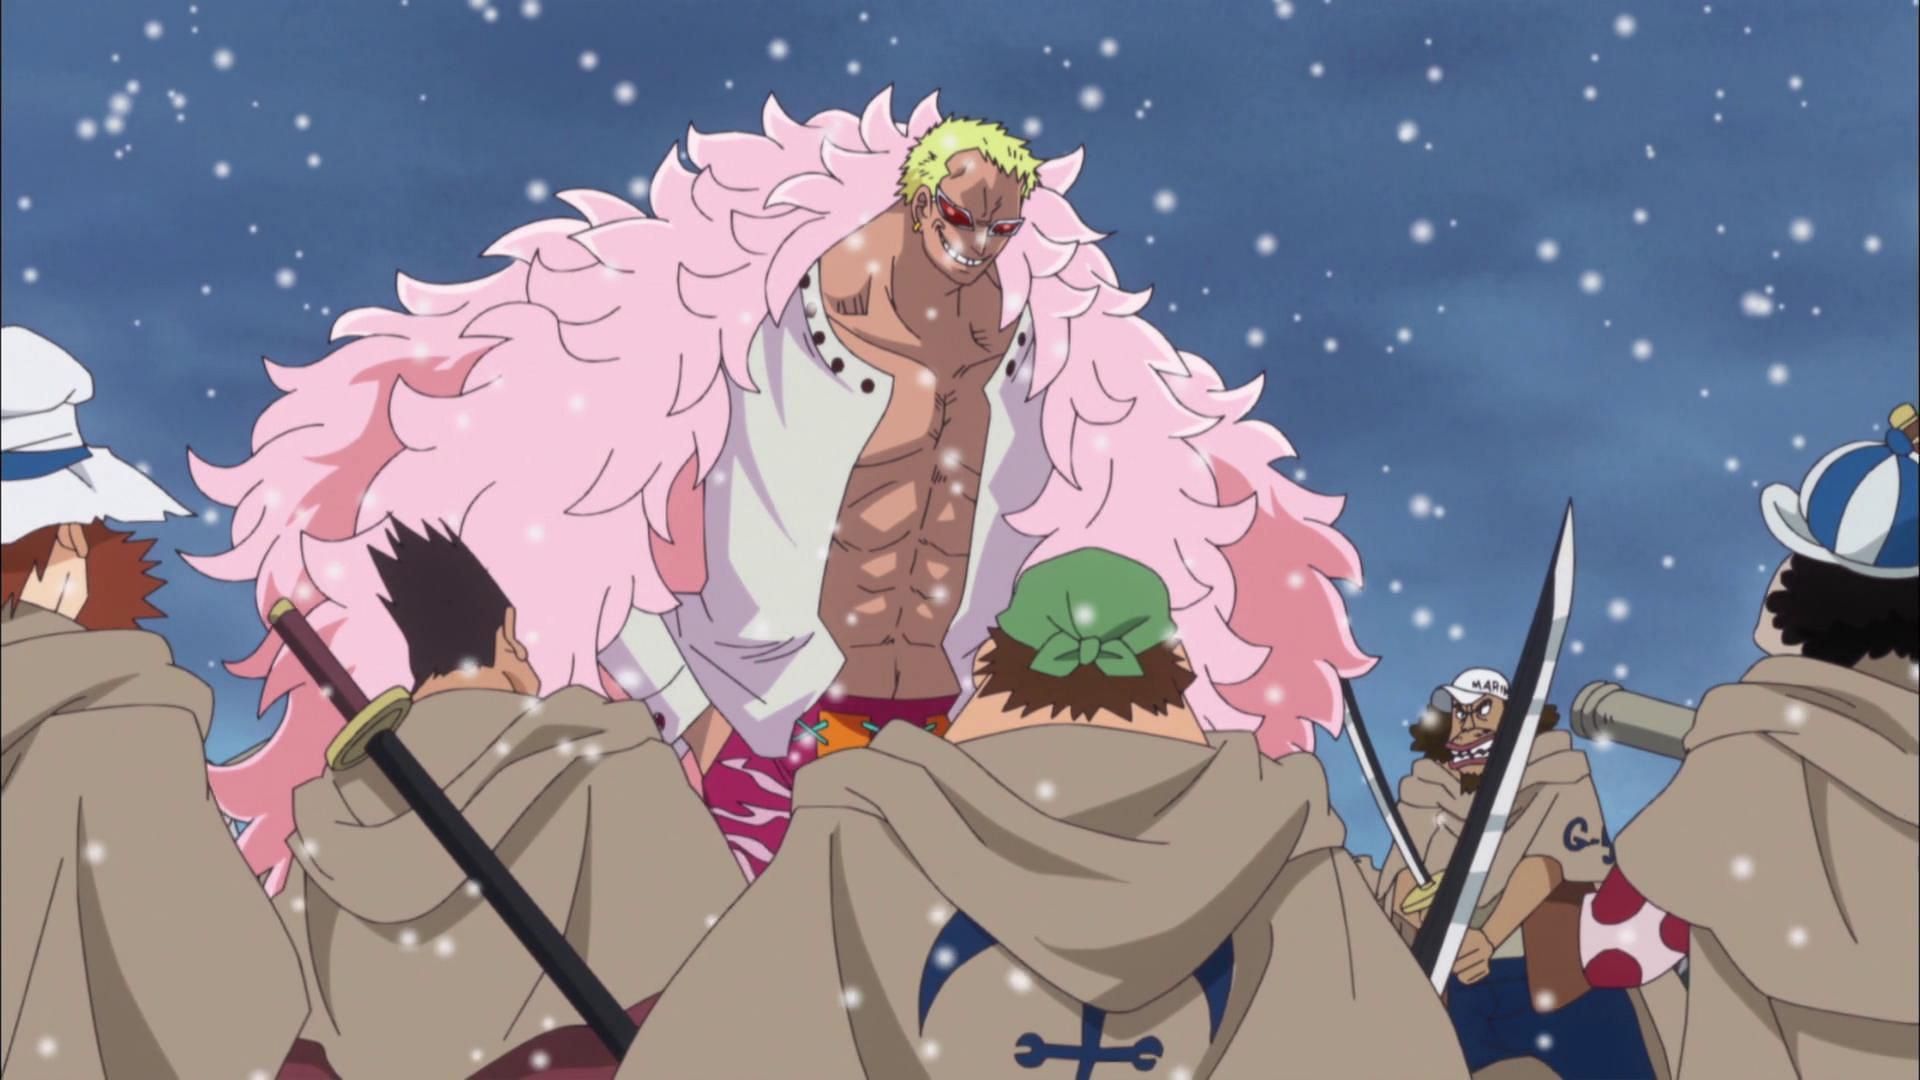 Doflamingo as seen in the One Piece anime (Image via Toei Animation)